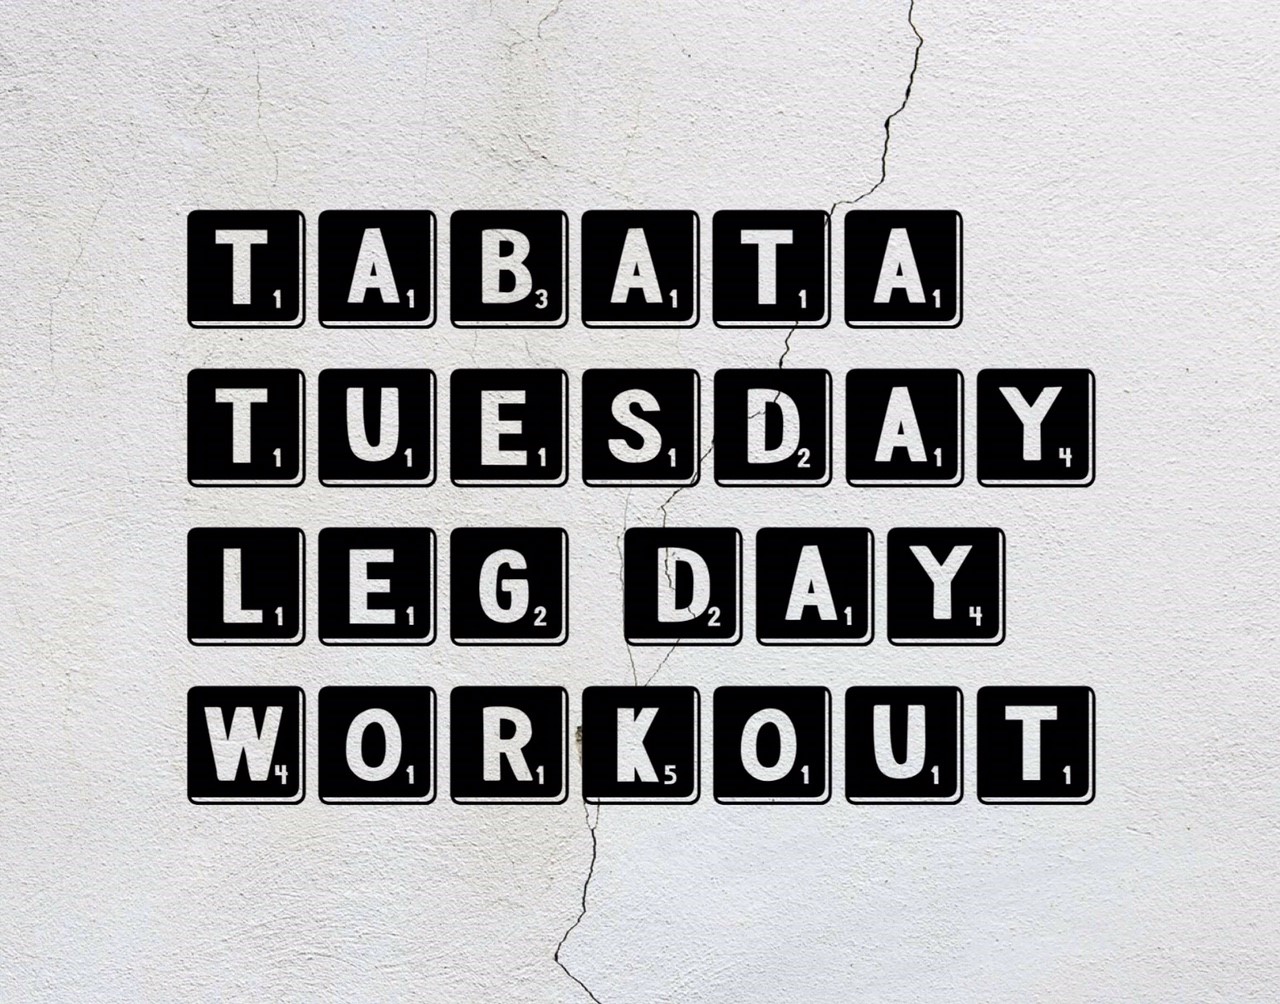 TABATA TUESDAY – Leg Day..